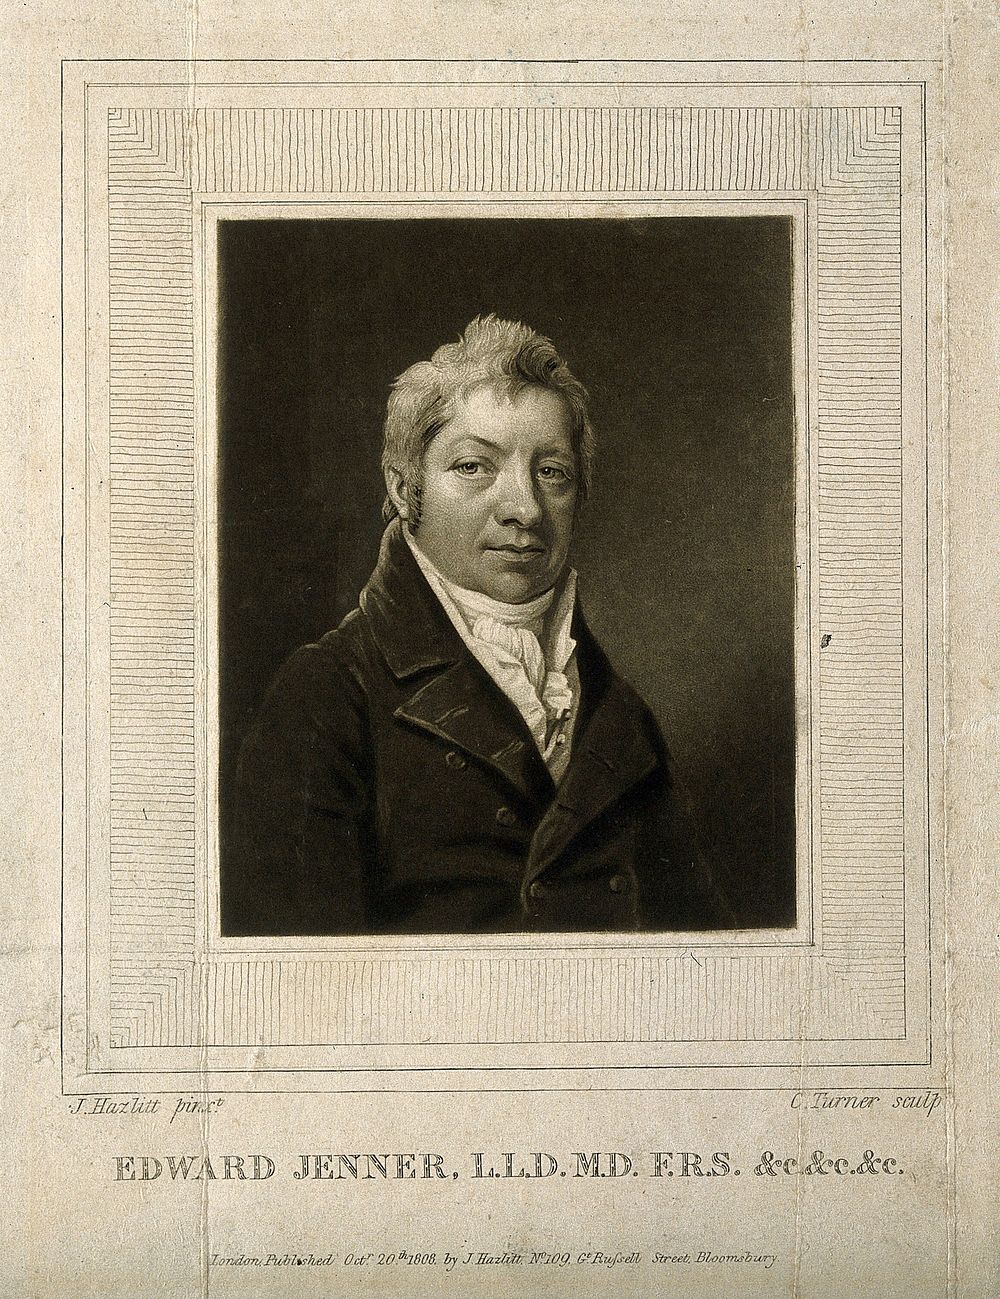 Edward Jenner. Mezzotint by C. Turner, 1808, after J. Hazlitt, 1808.